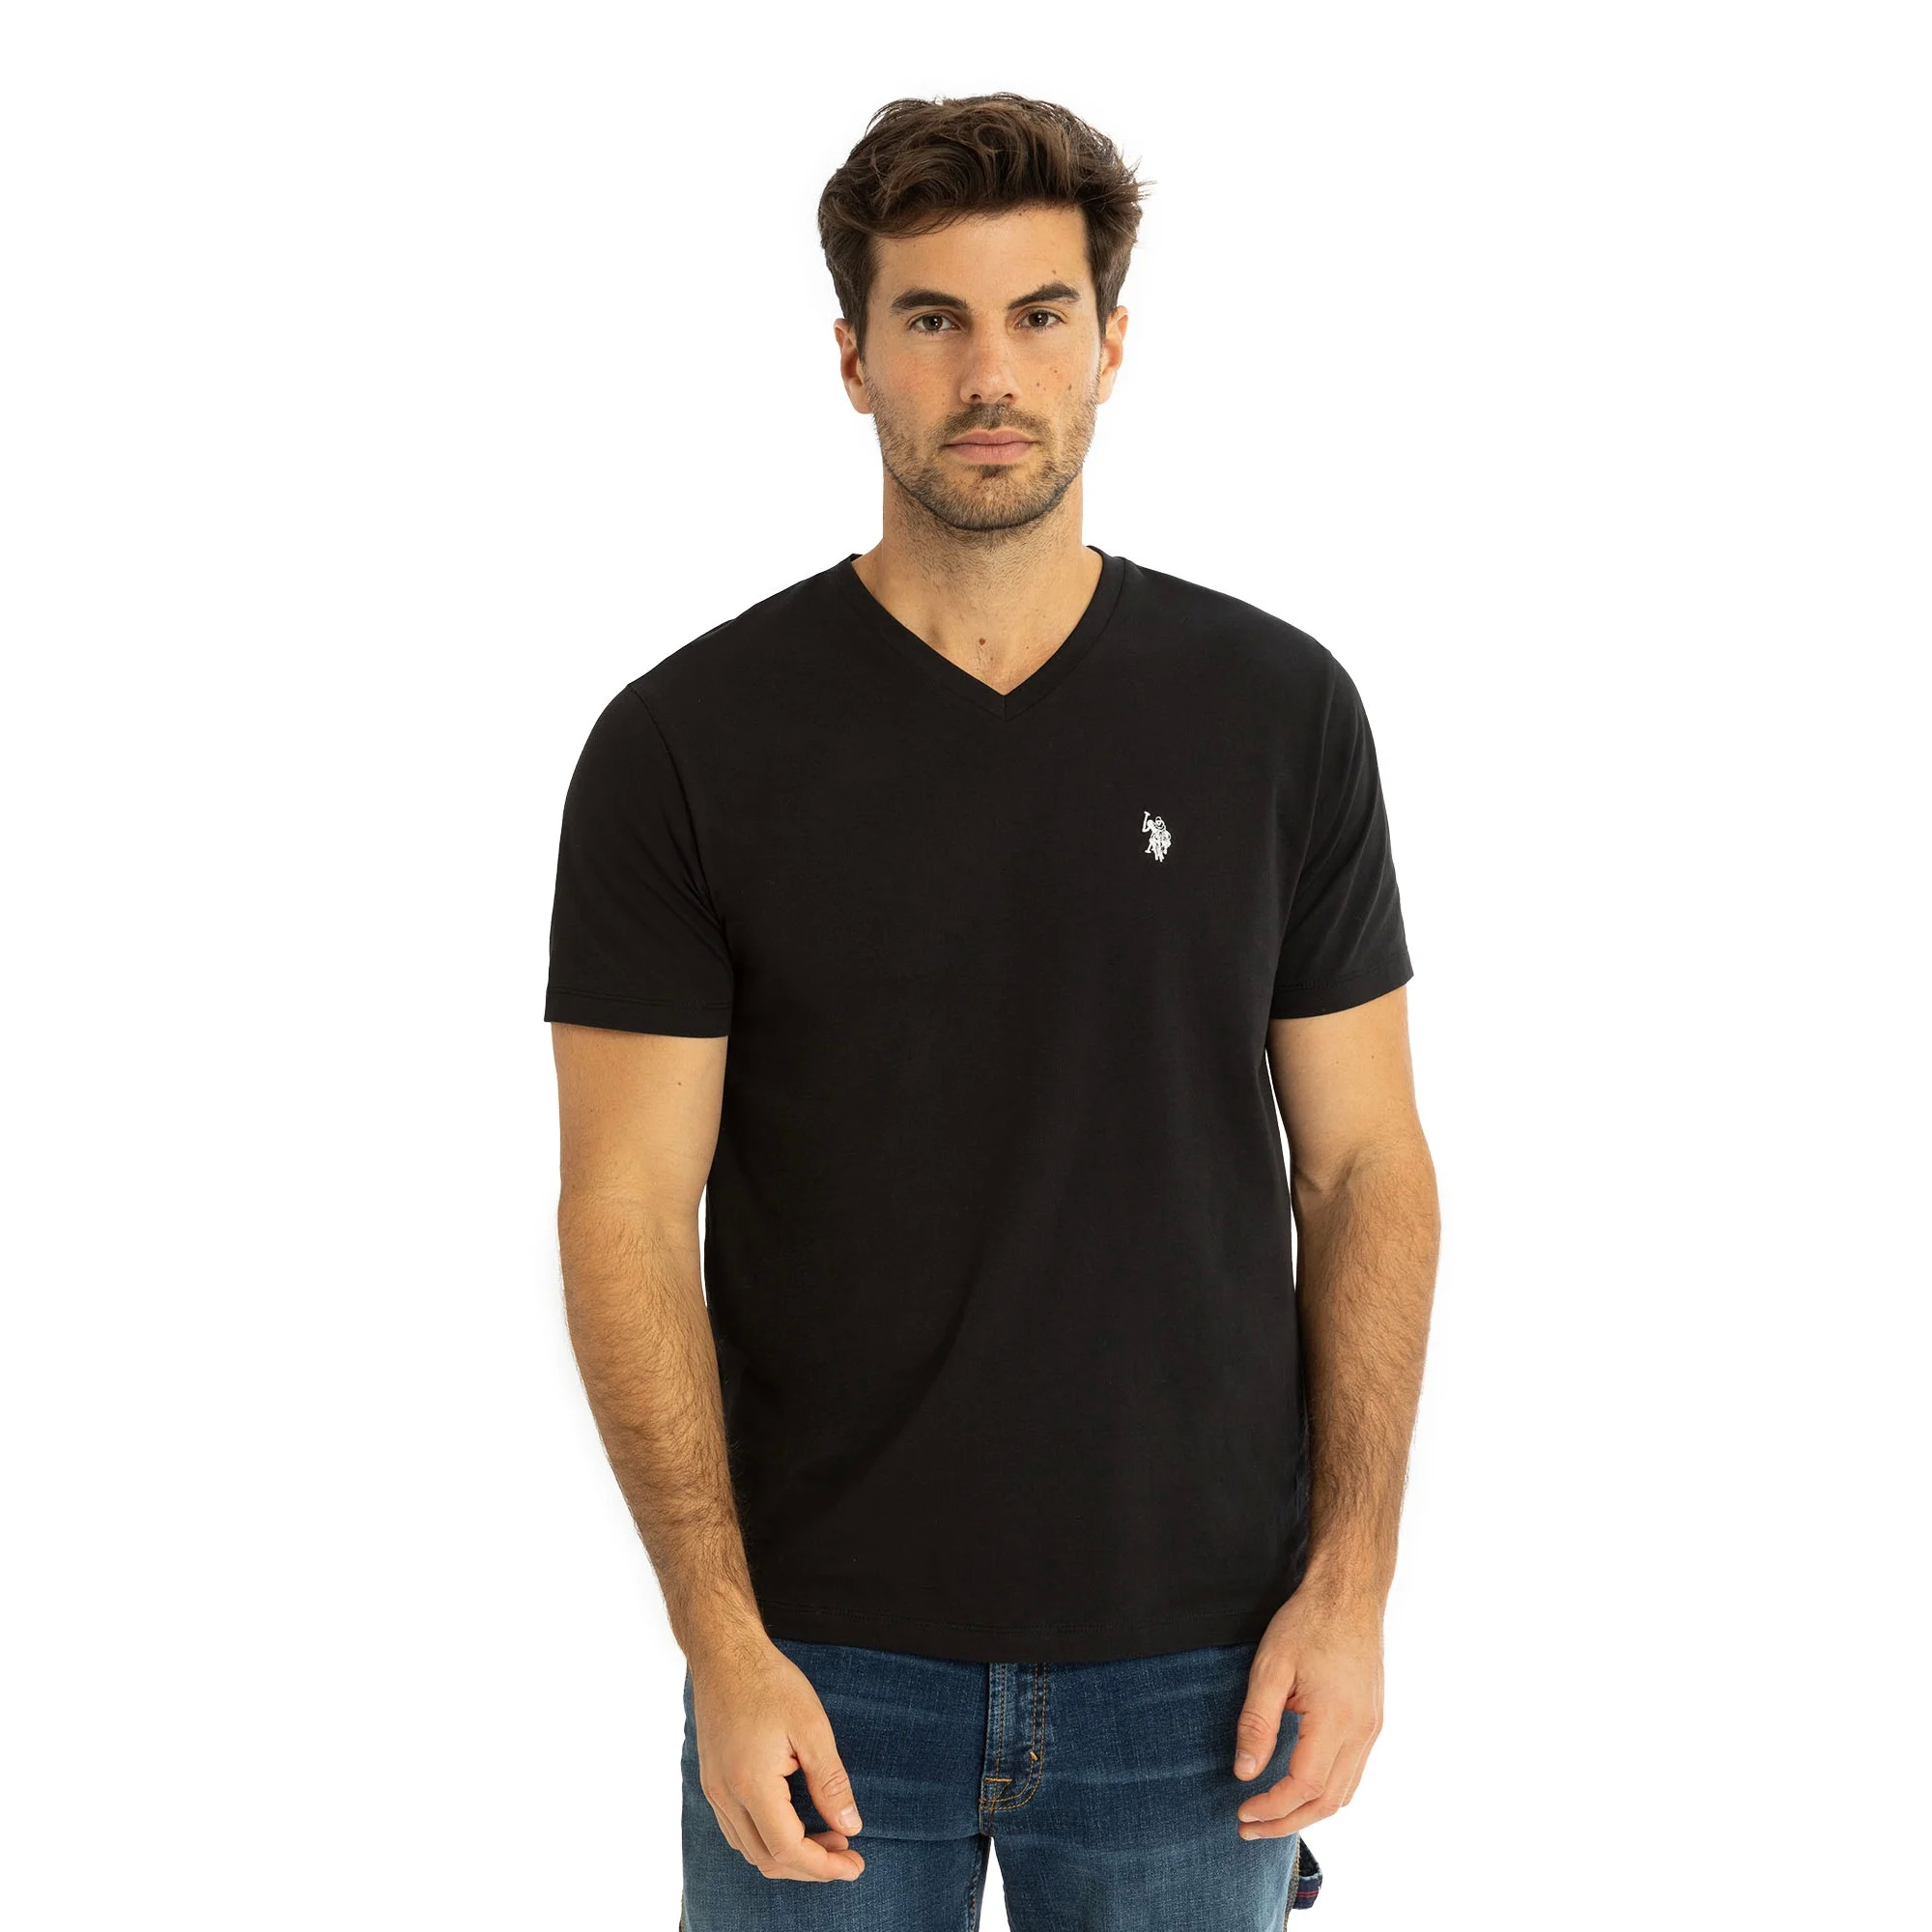 U.S. Polo Assn. Men's Short Sleeve V-Neck T-Shirt (Black, Size L-3XL) $5.68 & More + Free Shipping on $35+ or w/ Walmart+